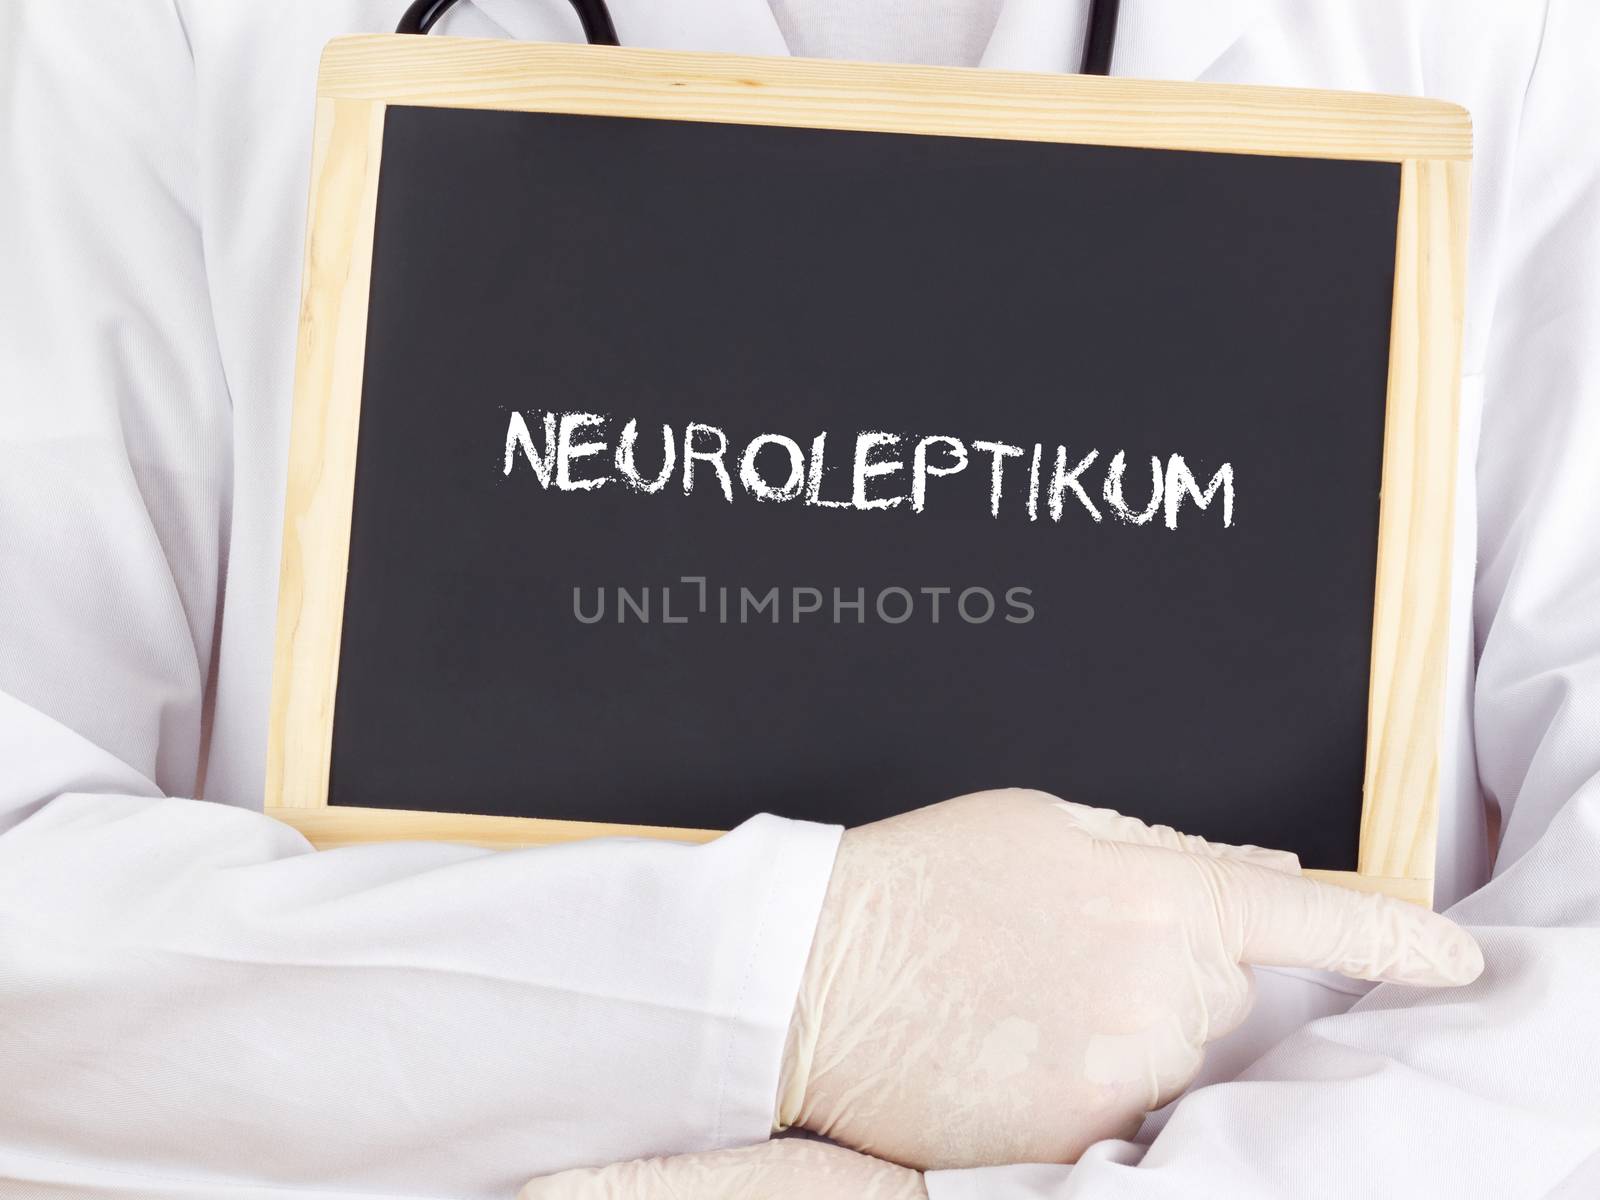 Doctor shows information: neuroleptics in german language